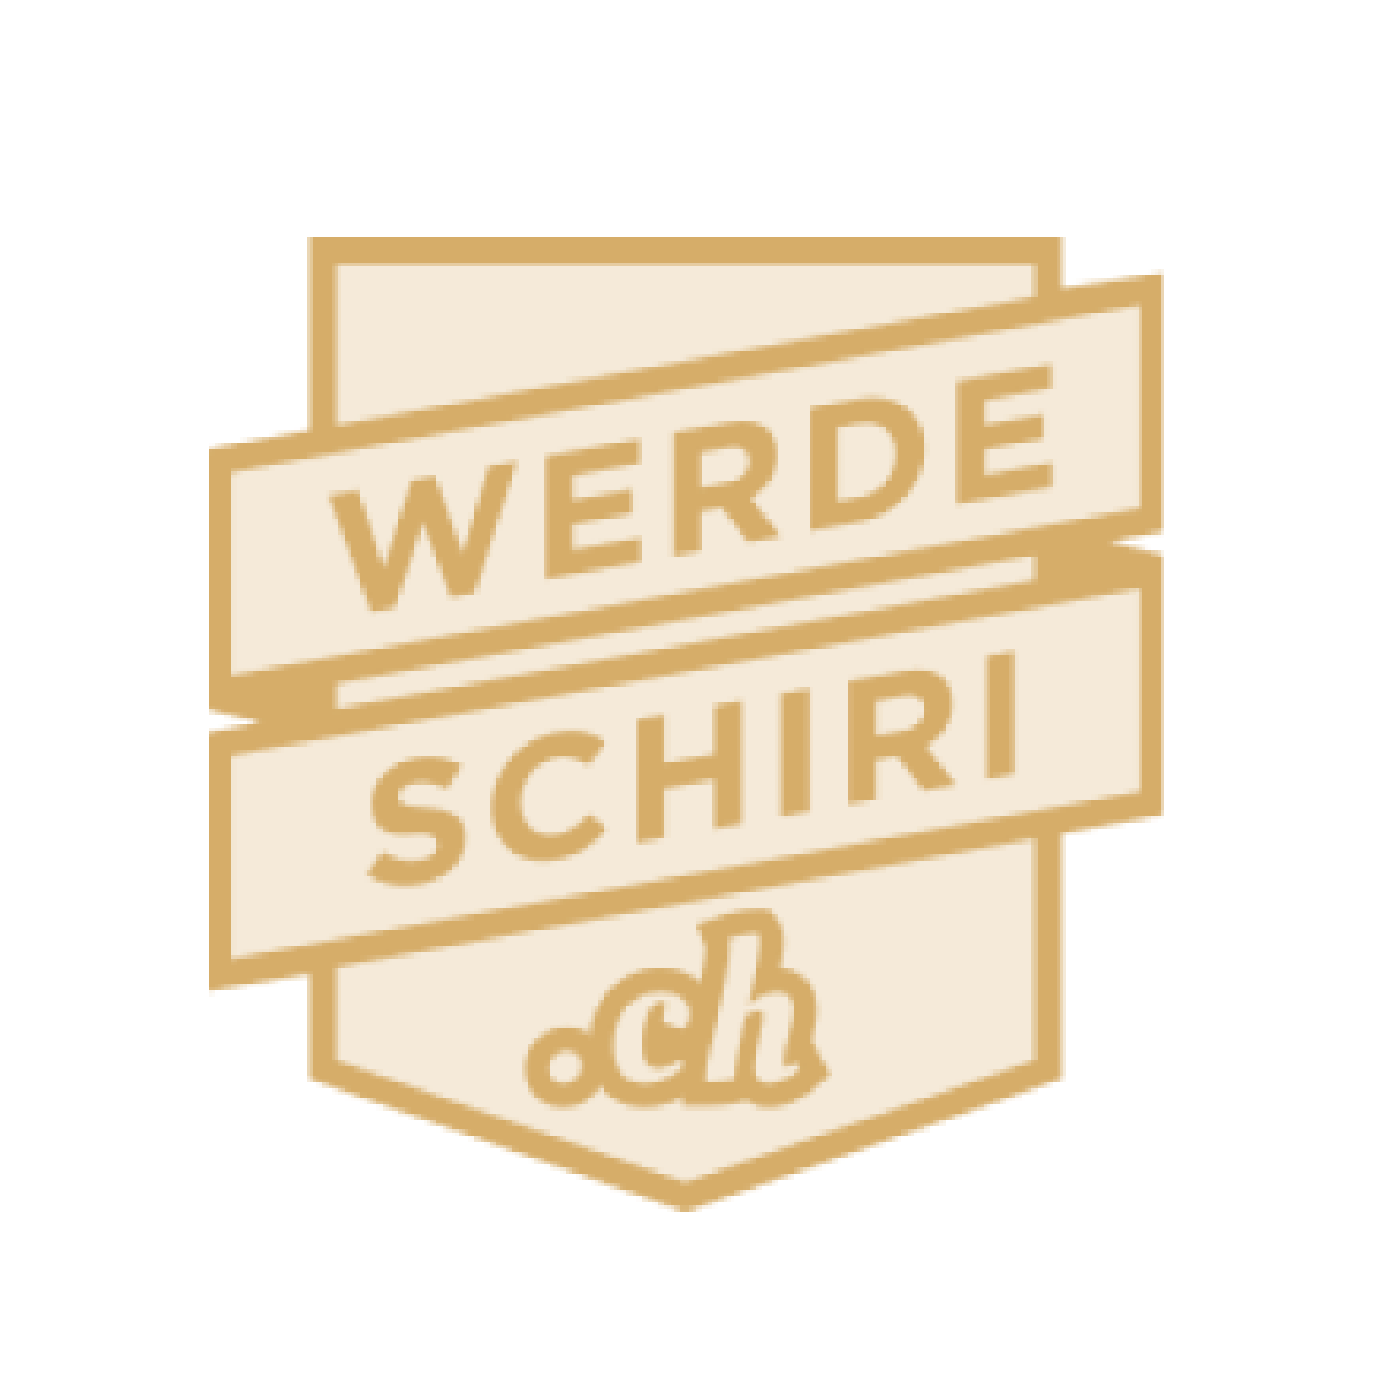 (c) Werdeschiri.ch